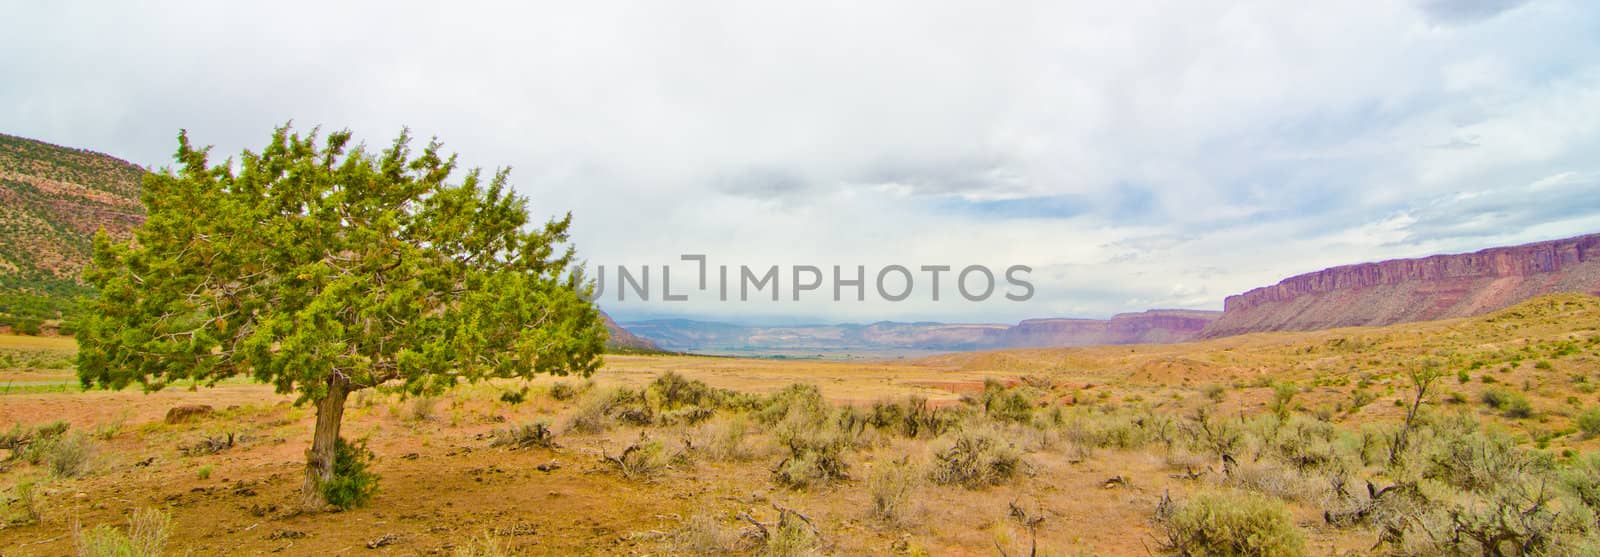 Juniper Tree in the Desert in Far Western Colorado by robert.bohrer25@gmail.com